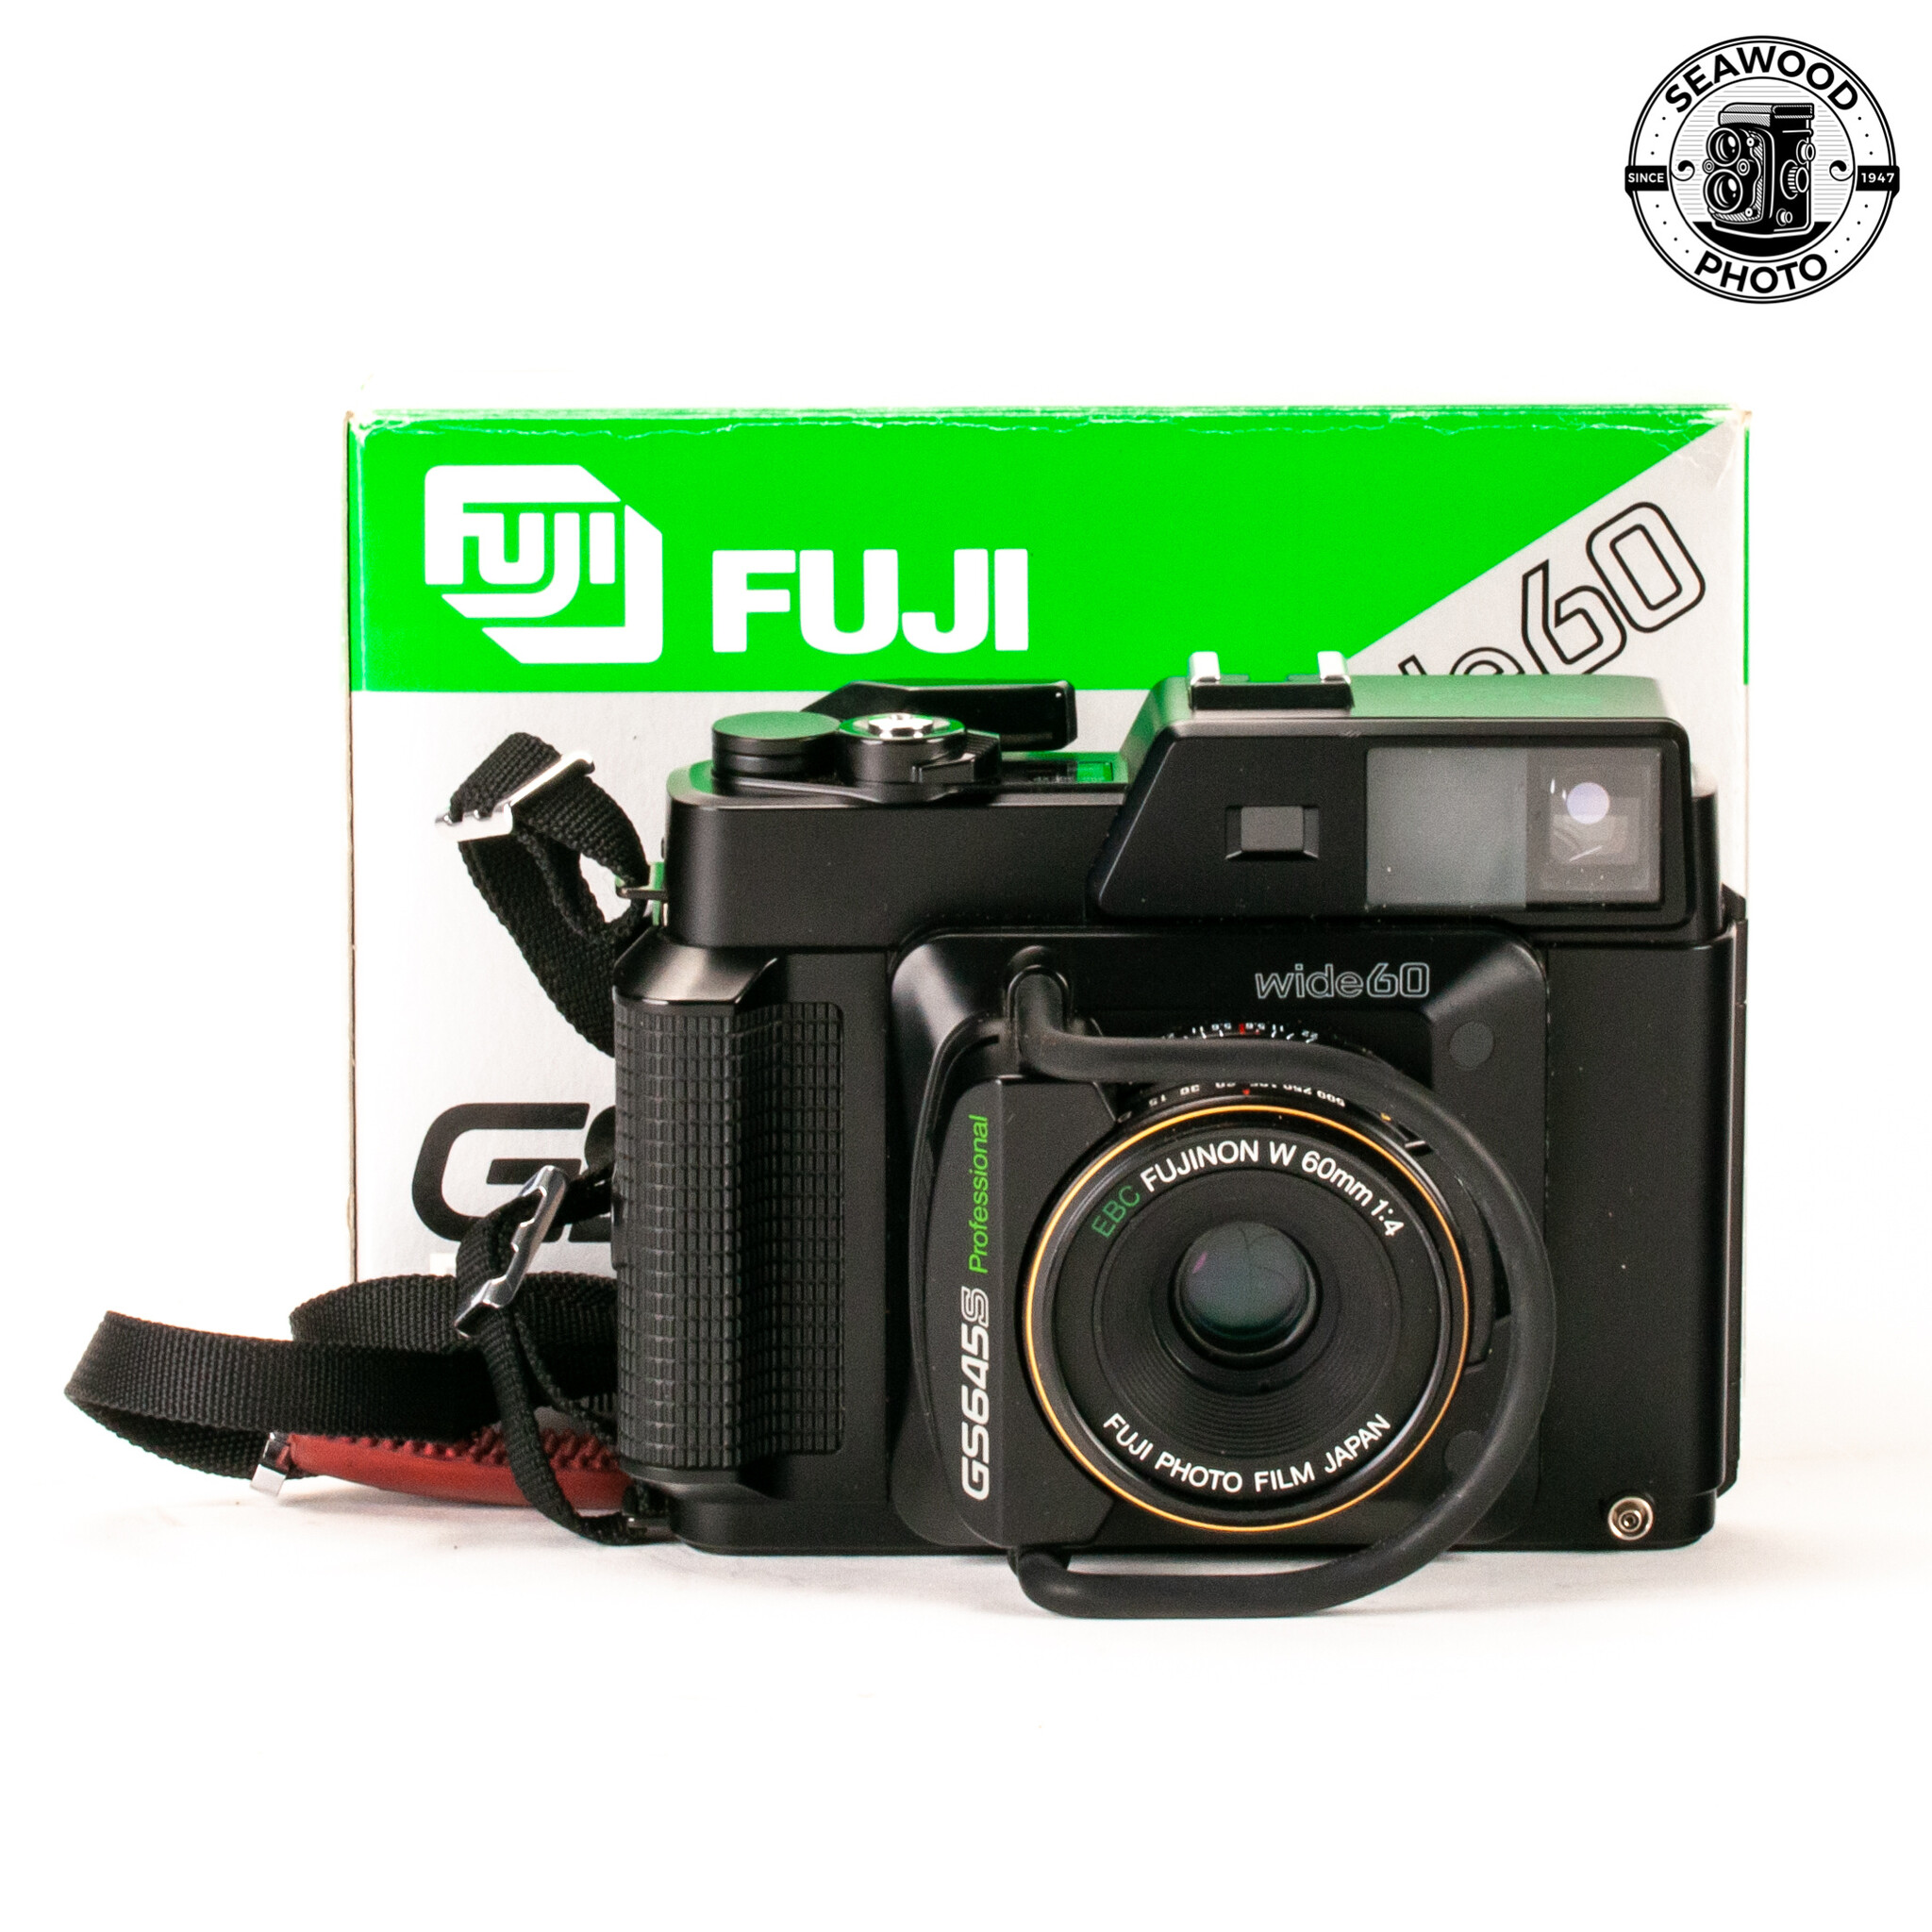 FUJIFILM GS645S Pro WIDE60 EBC 60mm F4 - フィルムカメラ